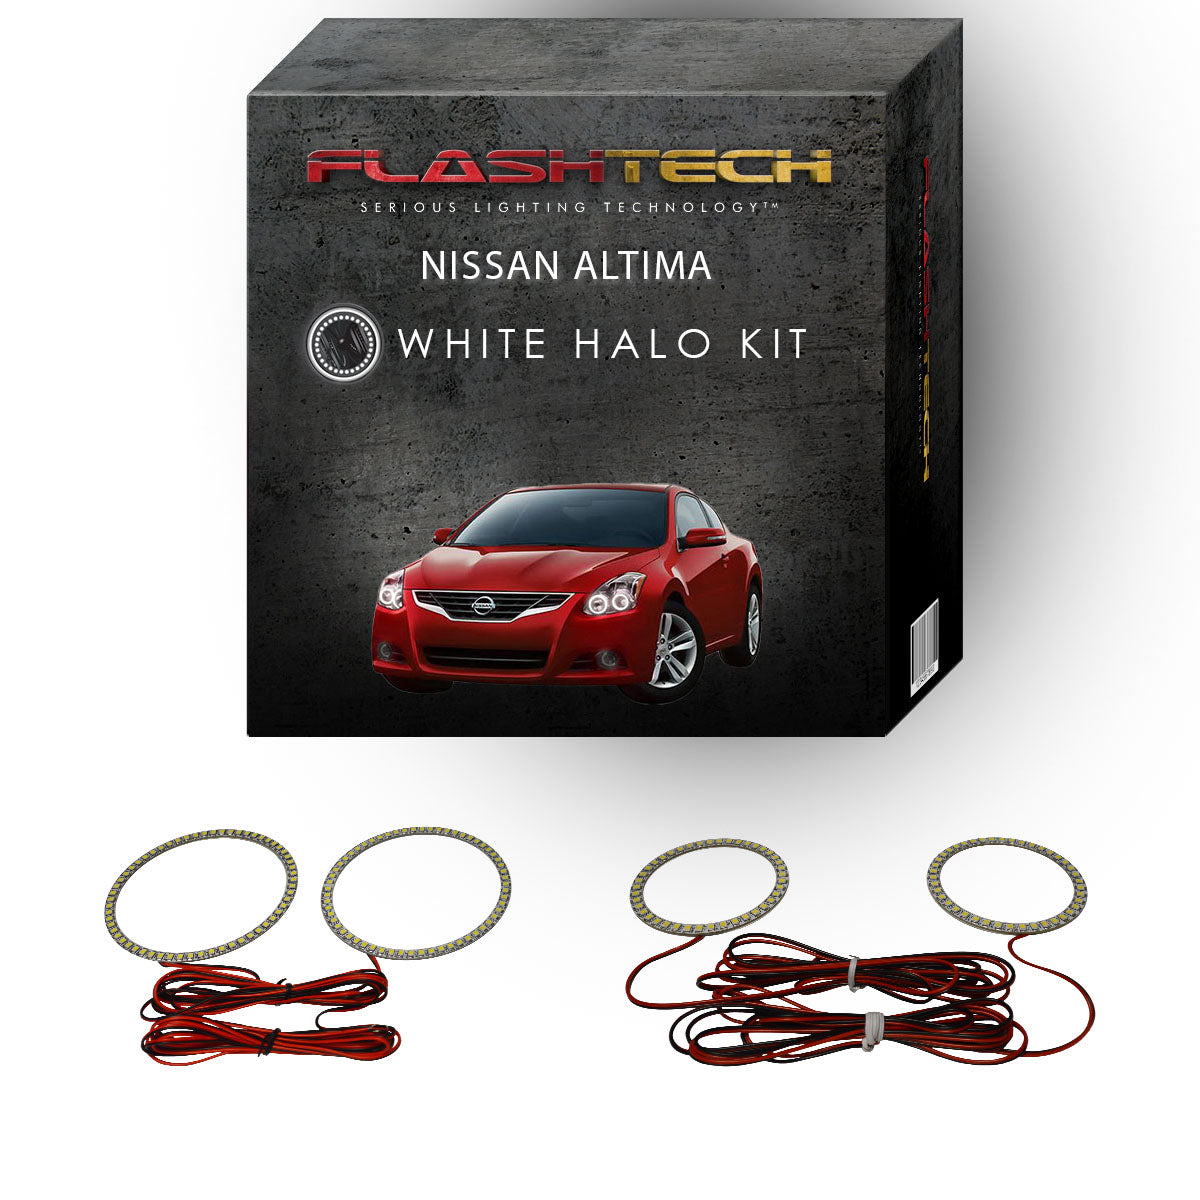 Nissan-Altima-2010, 2011, 2012-LED-Halo-Headlights-White-RF Remote White-NI-AL1012-WHRF